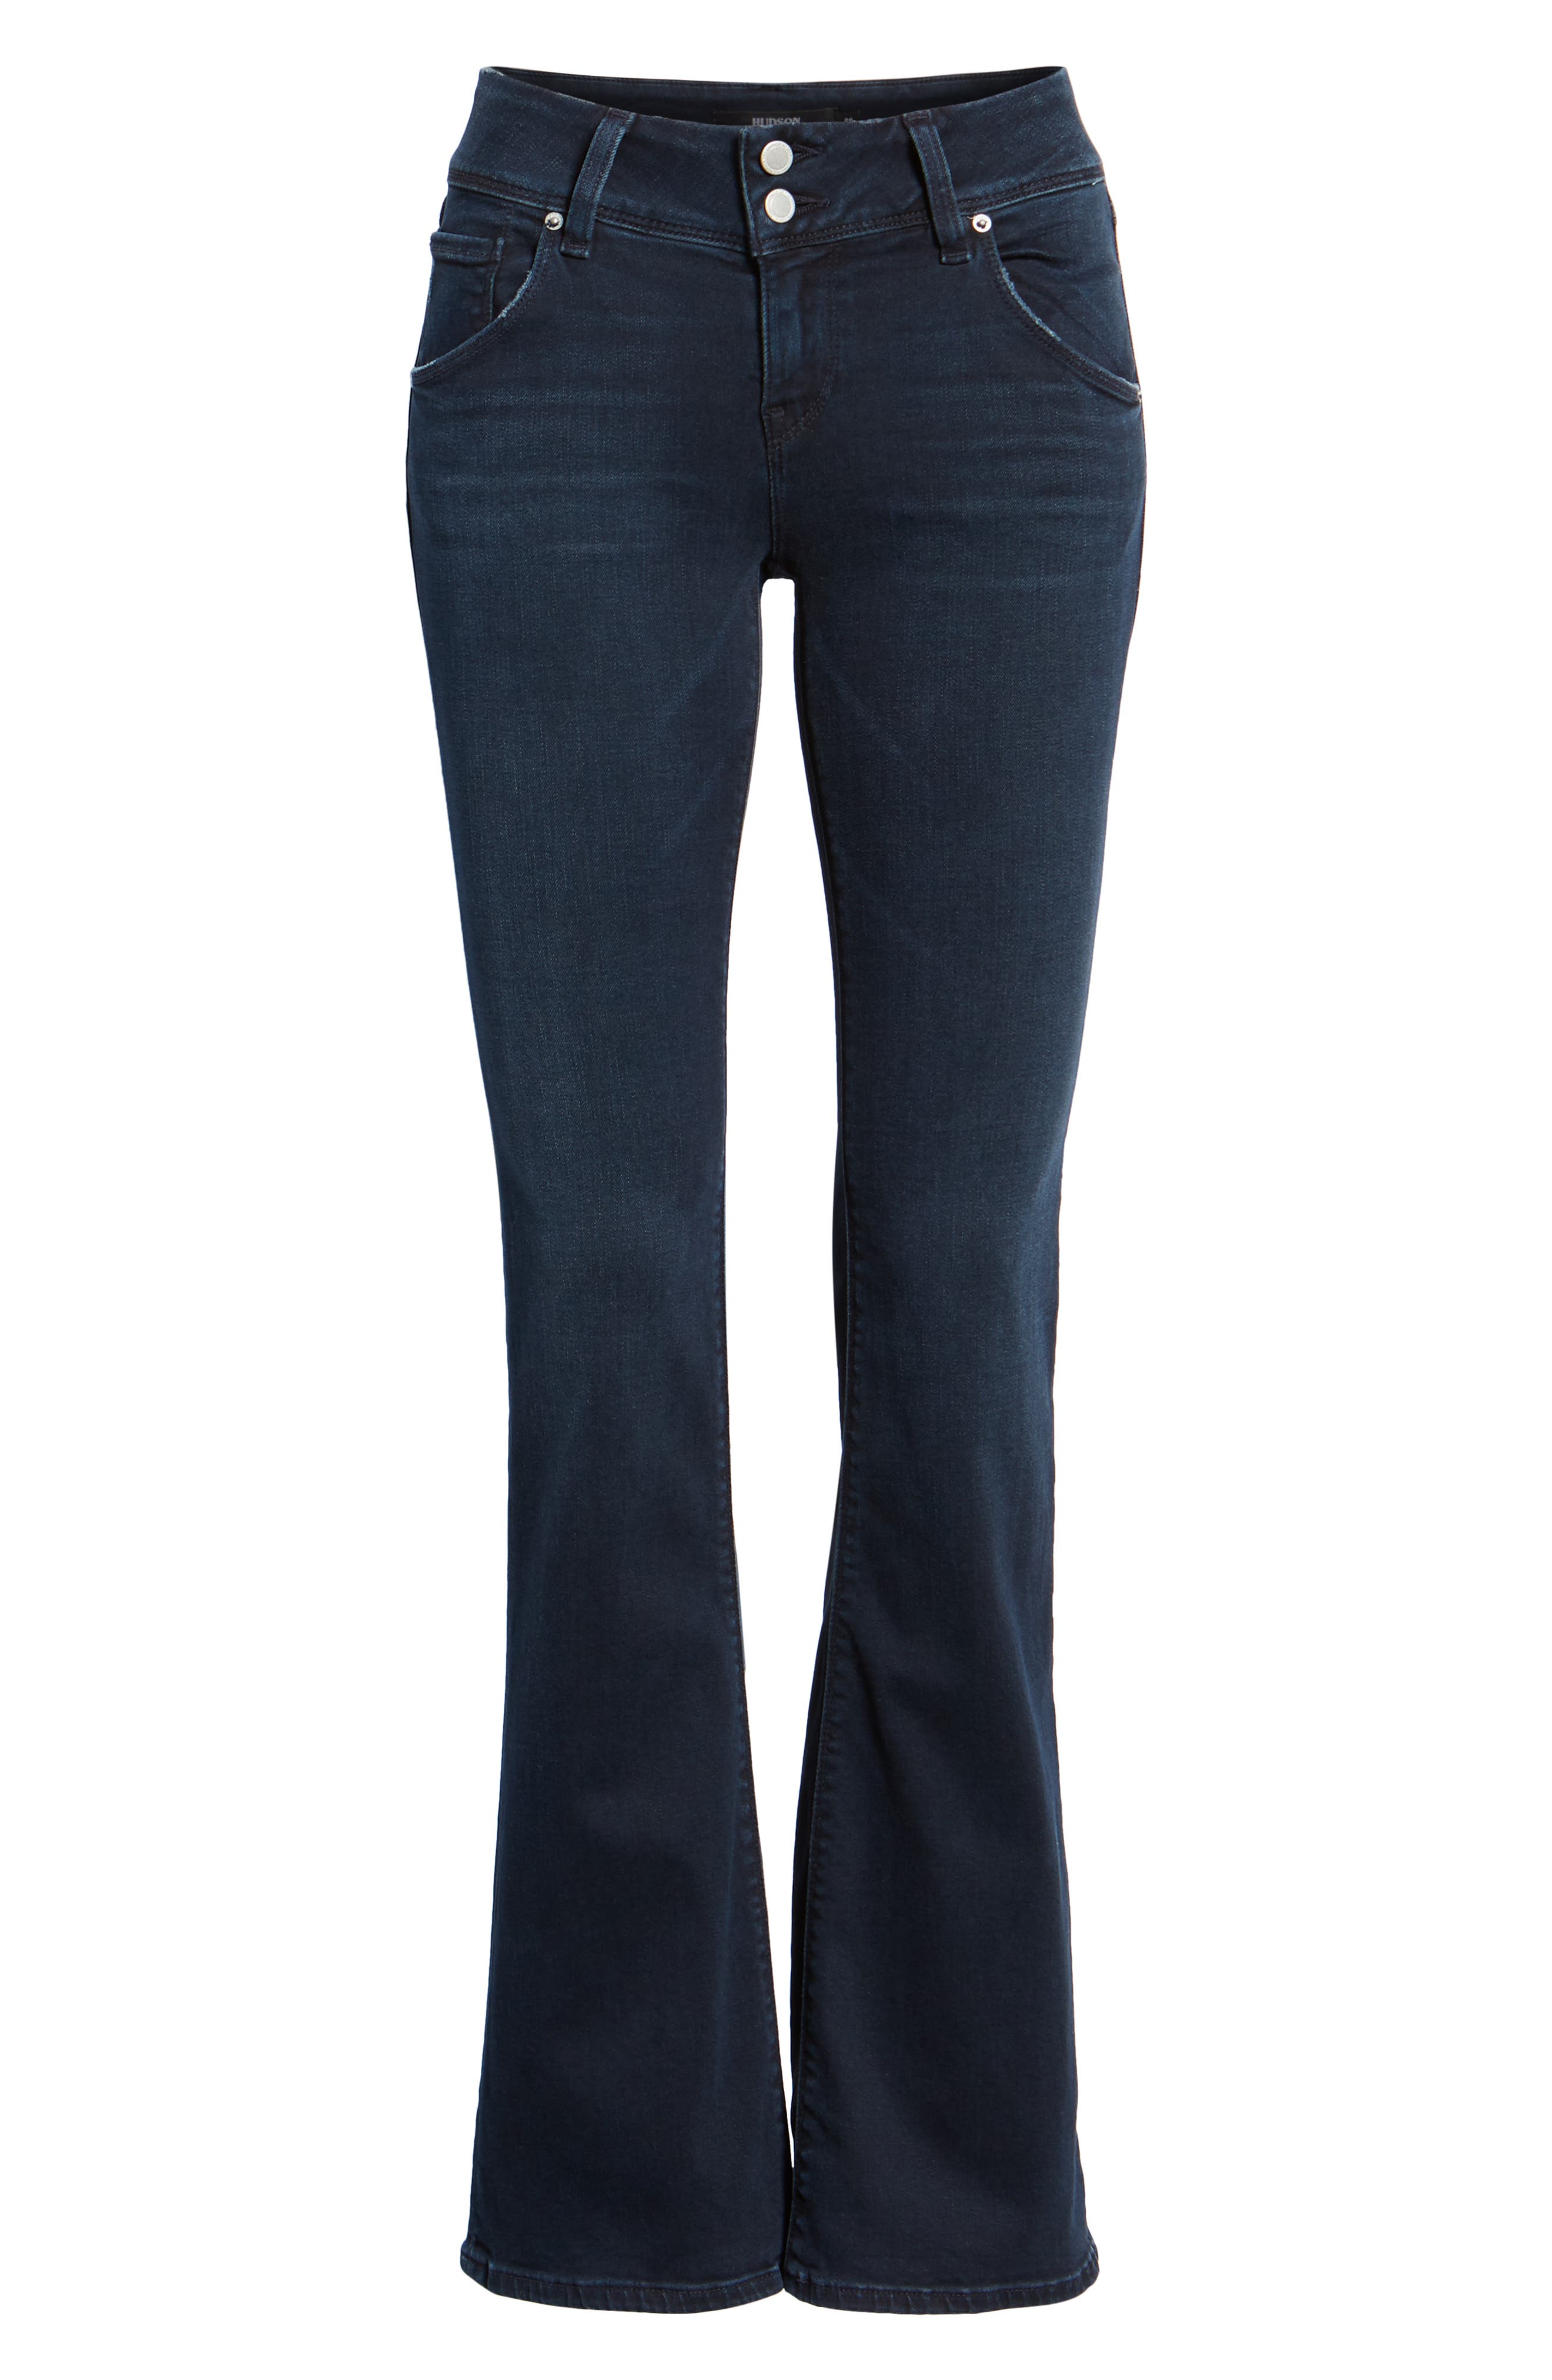 HUDSON Jeans | Signature Midrise Bootcut Petite Jeans | Nordstrom Rack